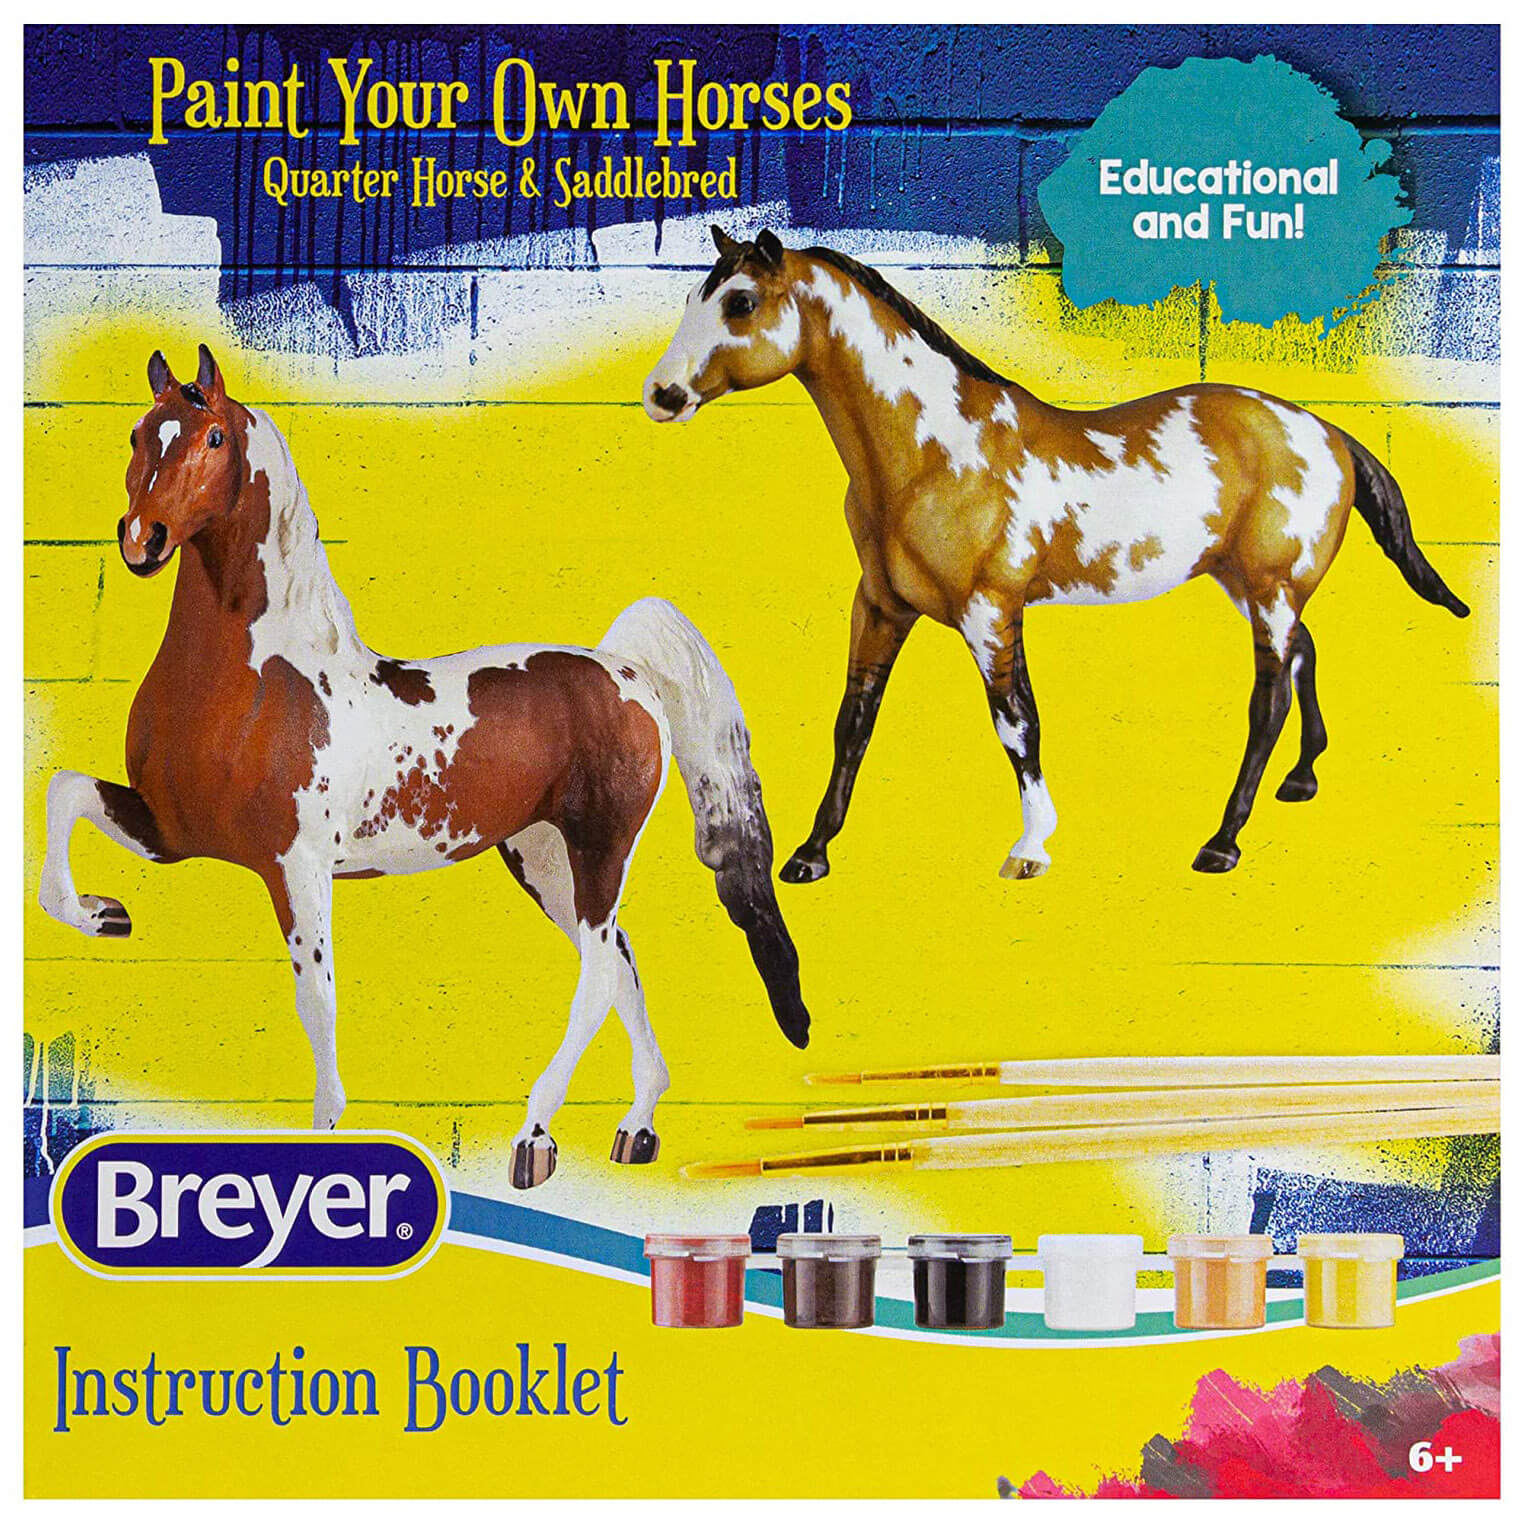 Breyer Craft Paint Your Own Horses Quarter Horse & Saddlebred Set